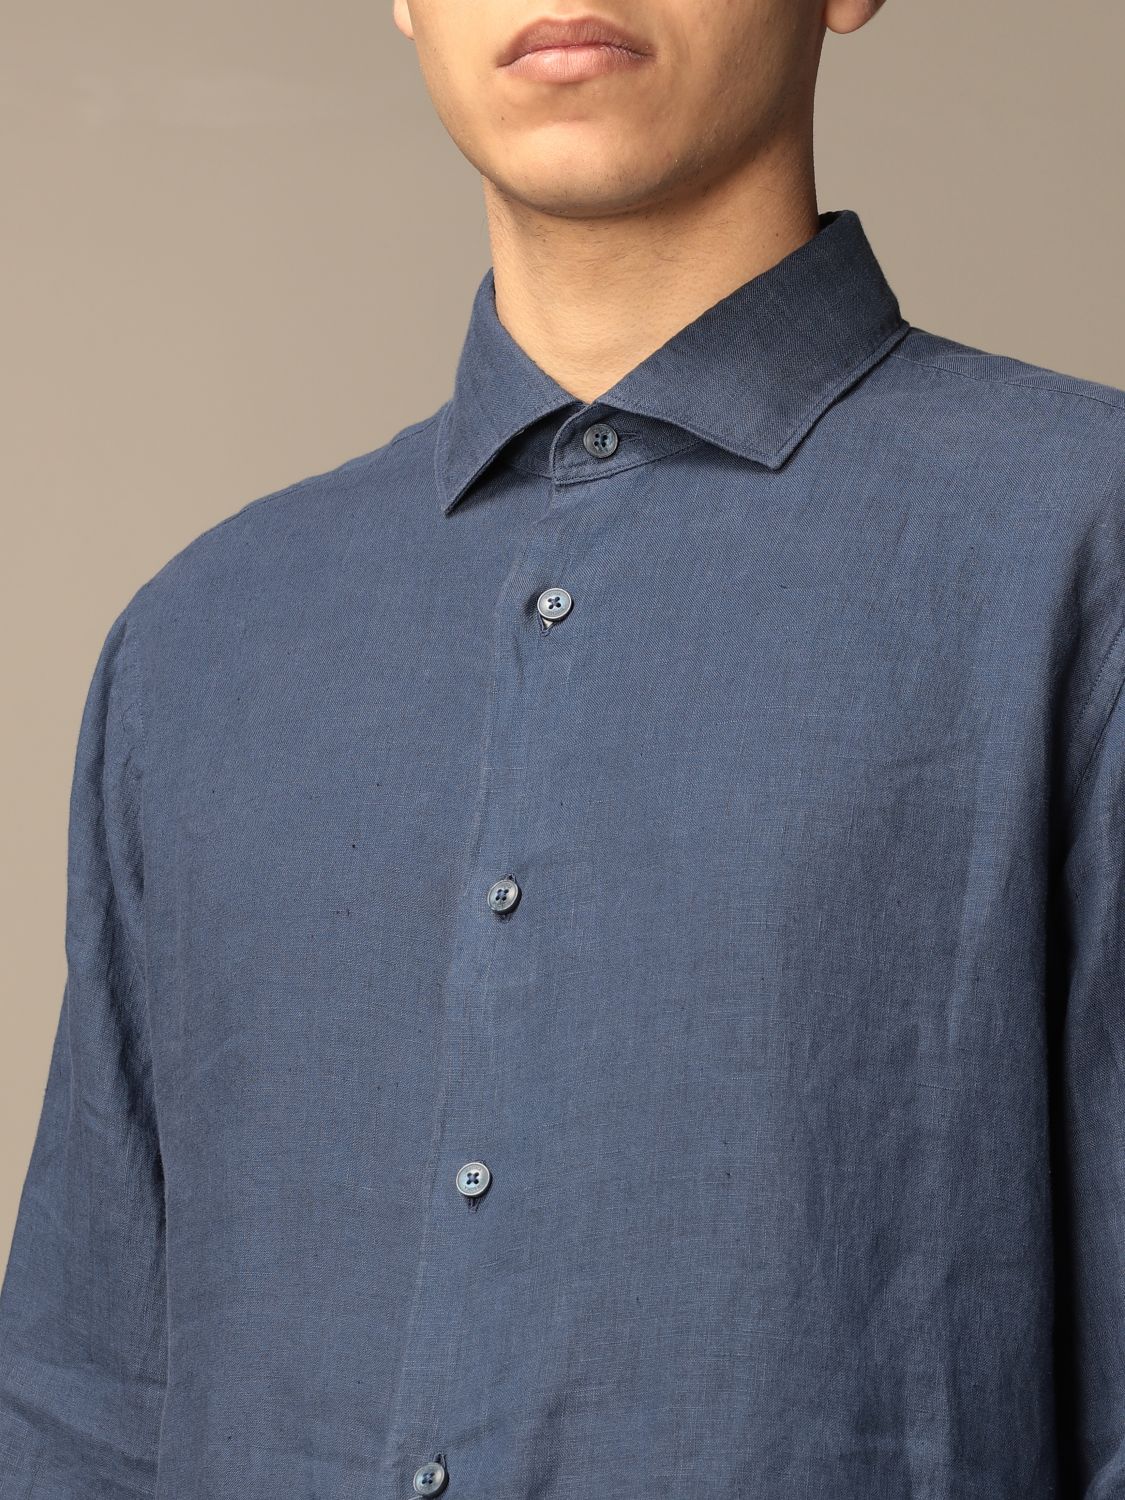 Shirt Z Zegna: Z Zegna linen shirt with French collar navy 4